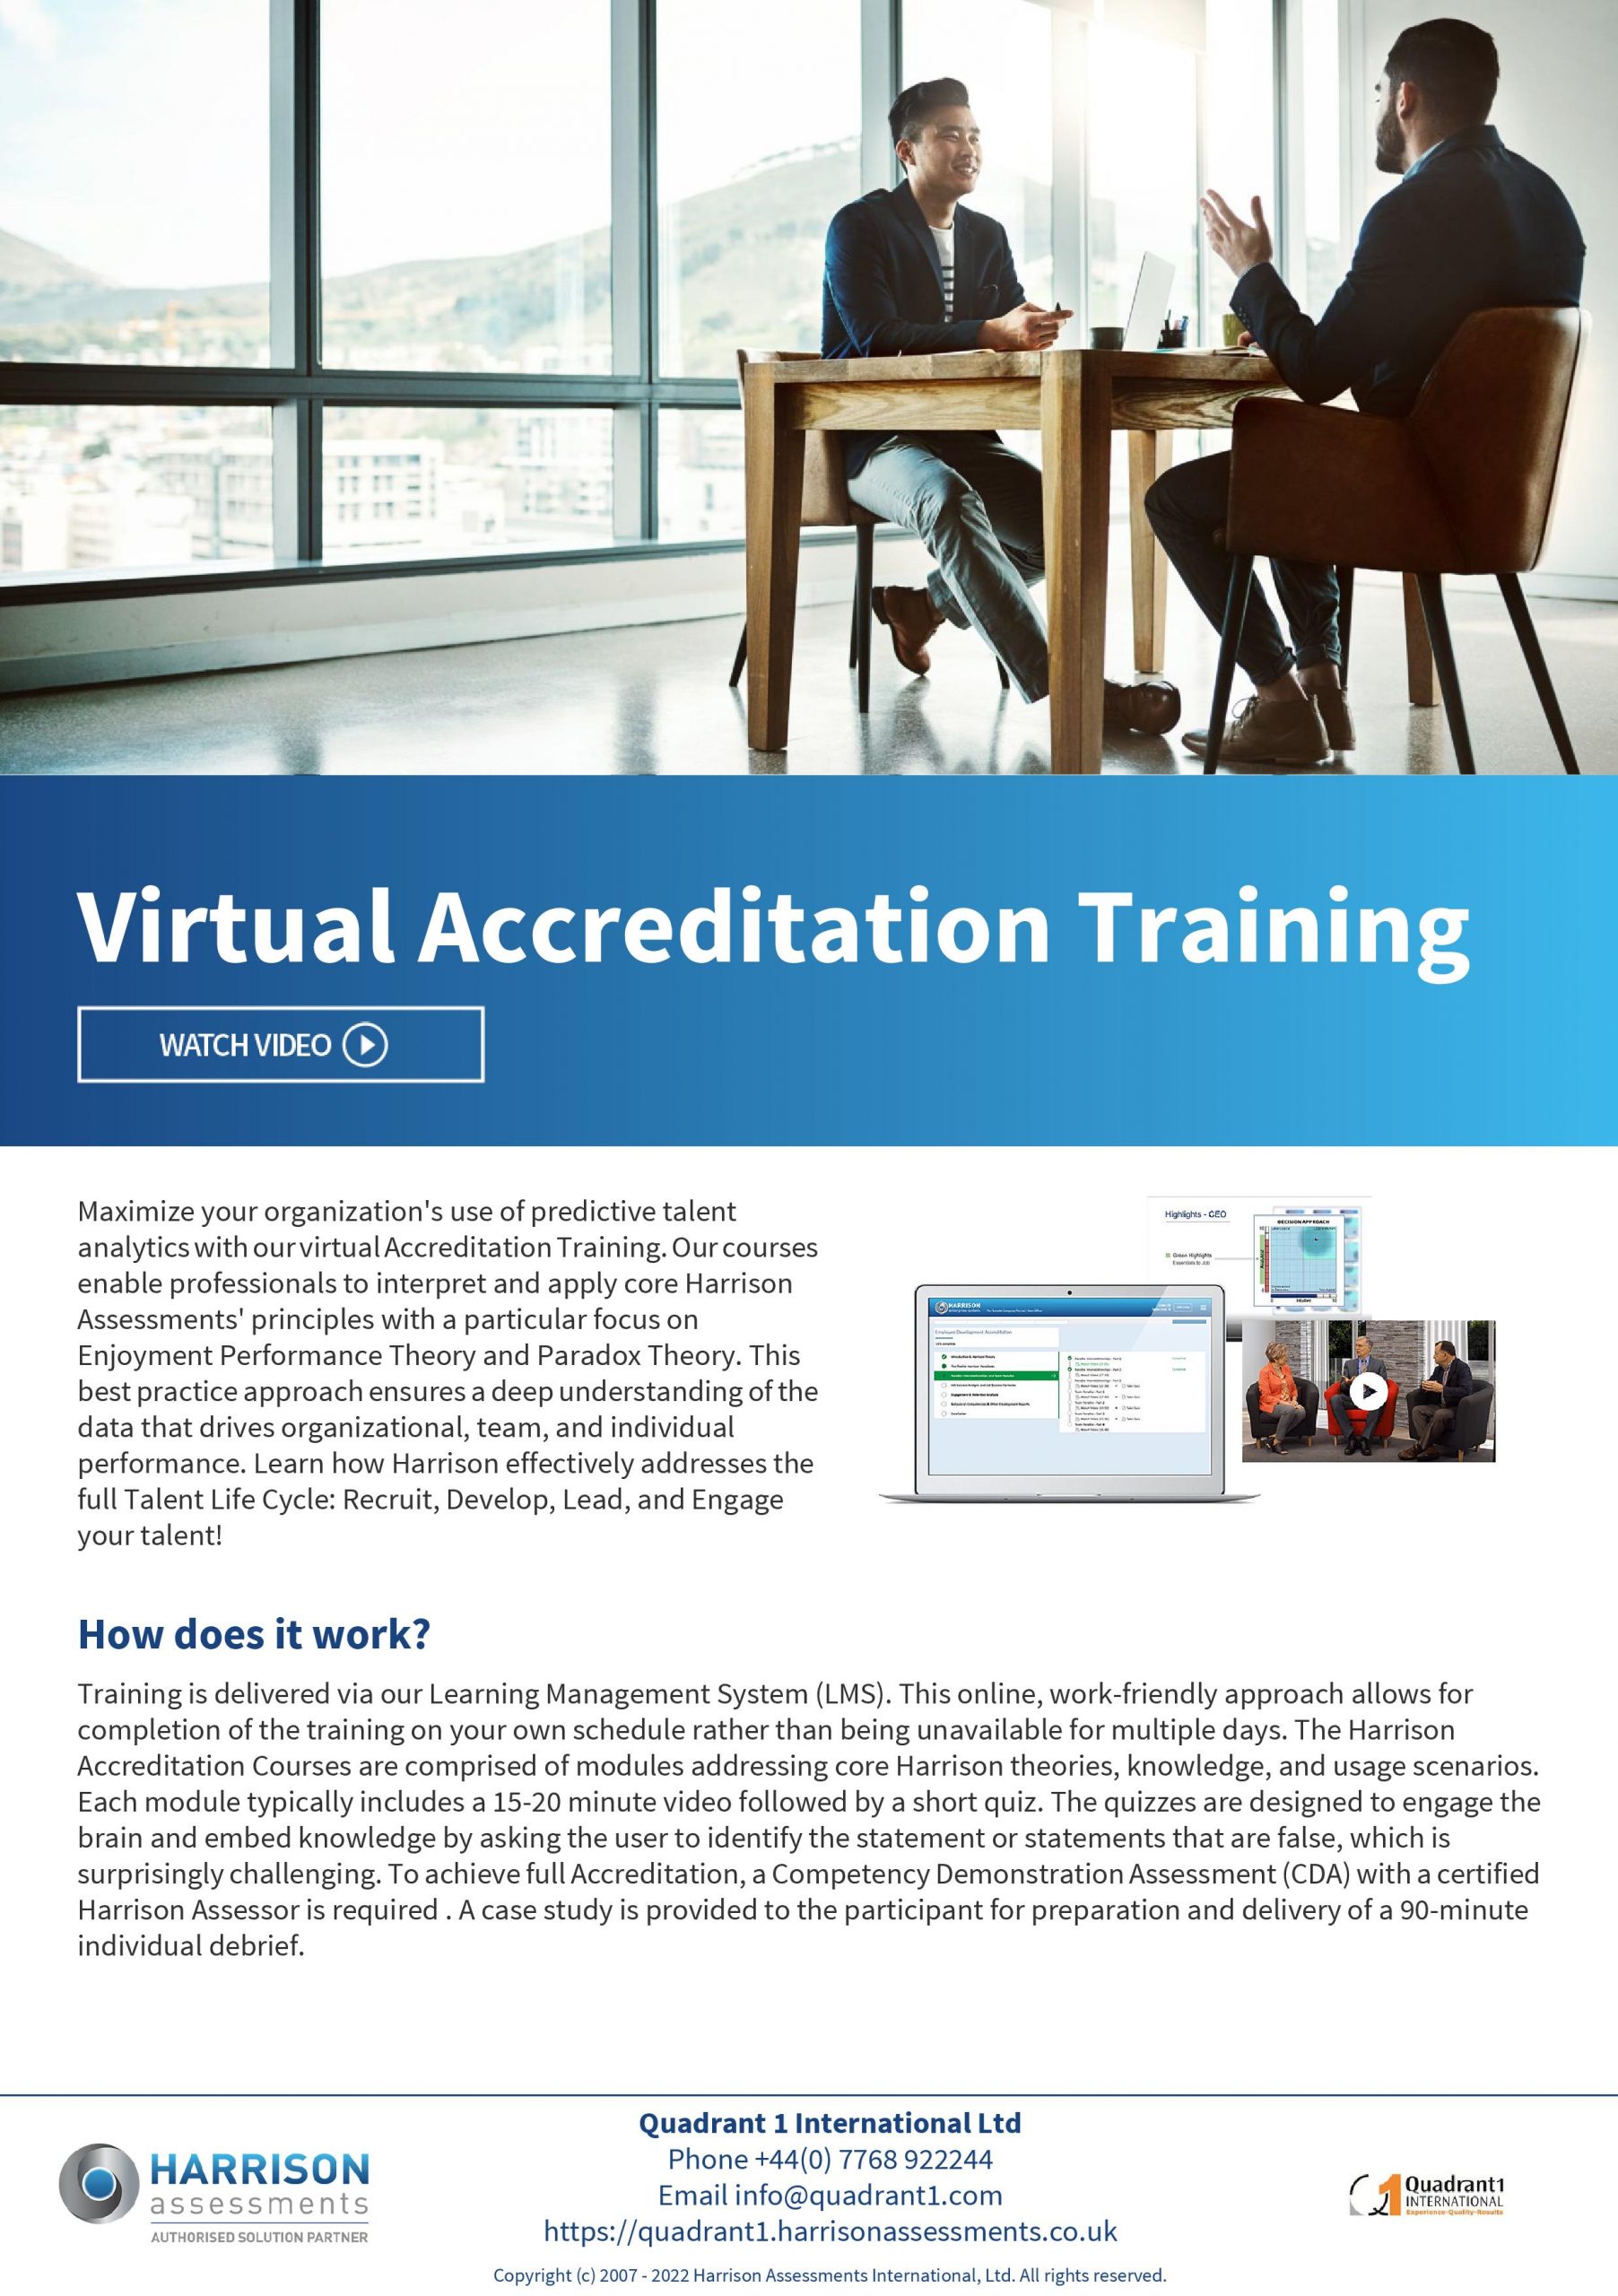 Image of Harrison Assessments Accreditation Training flyer